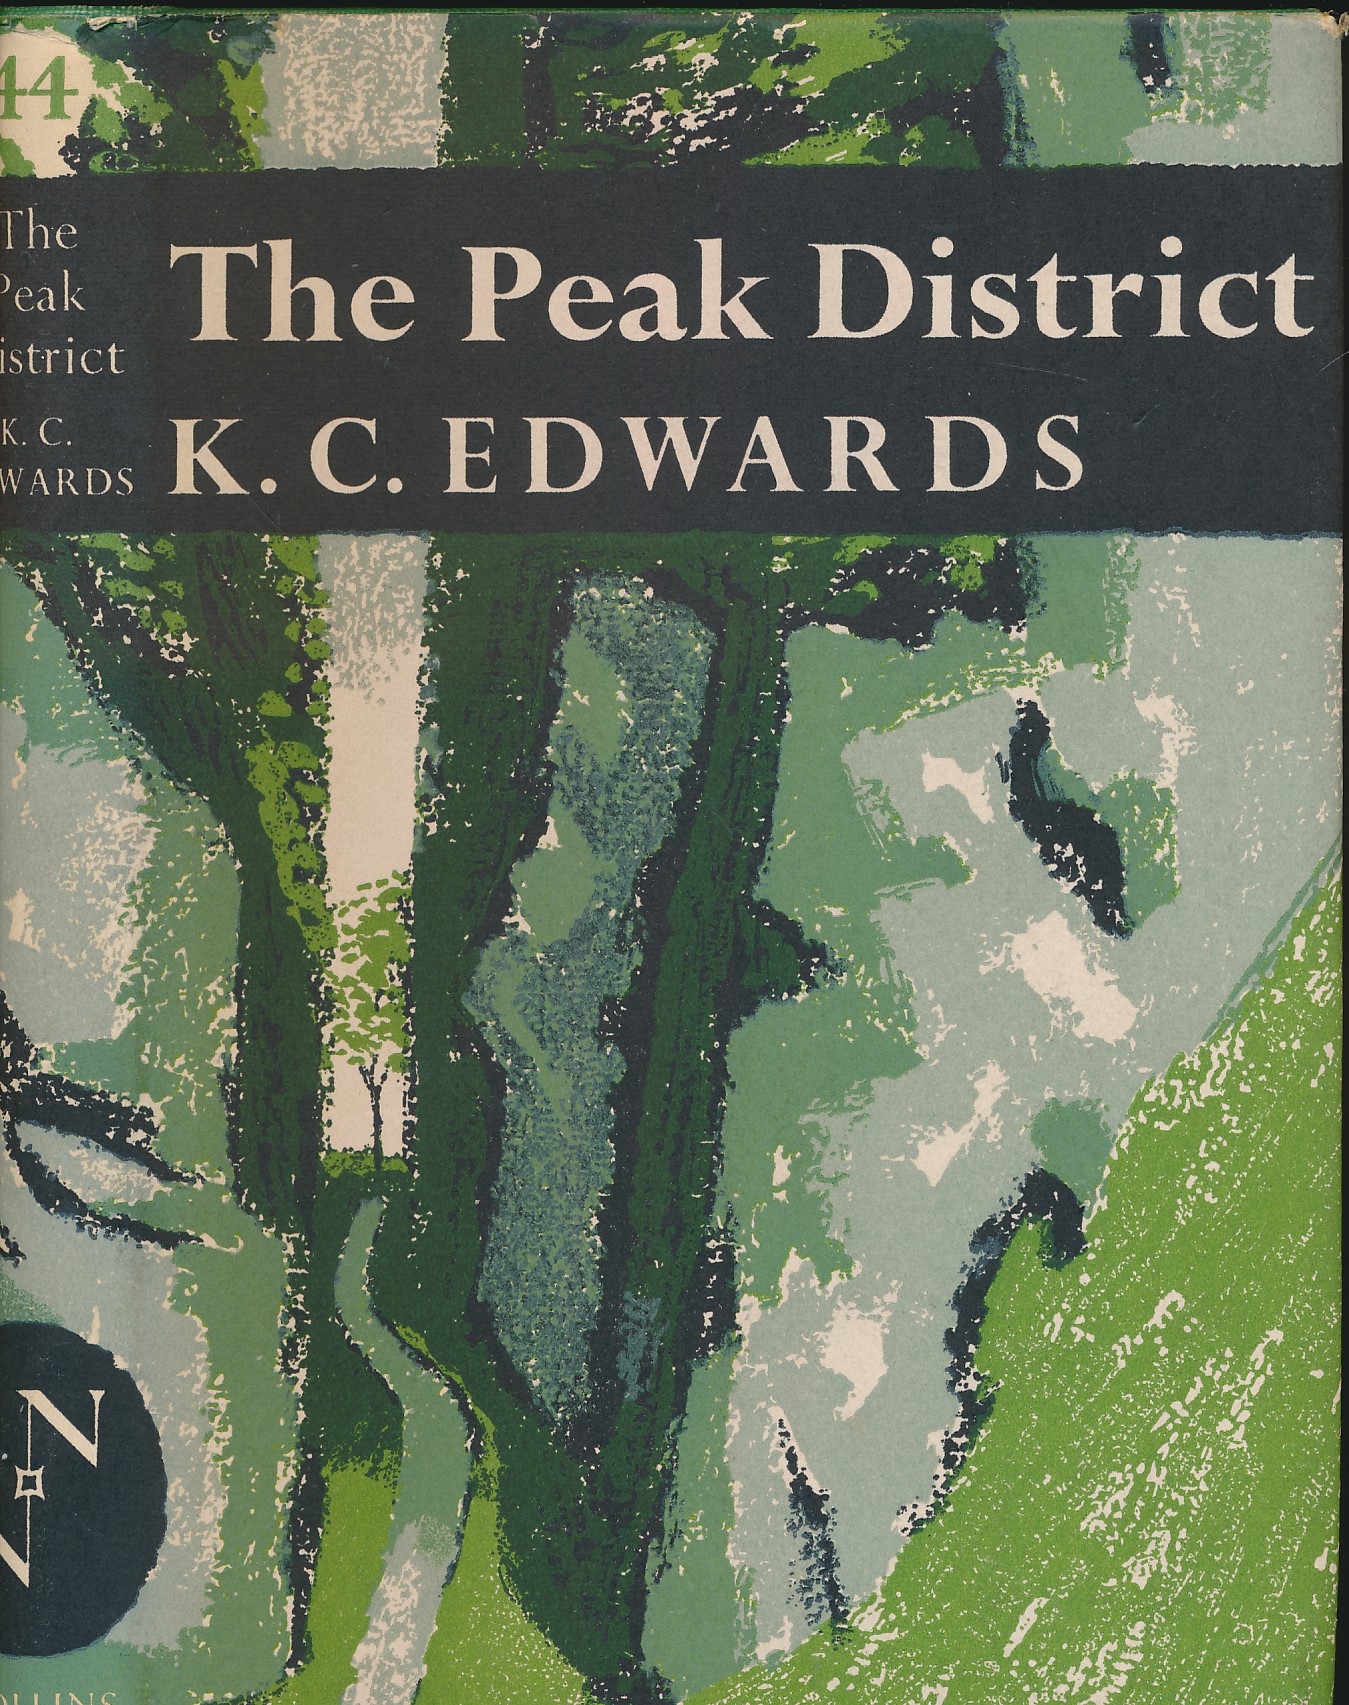 The Peak District. New Naturalist No. 44. 1962.